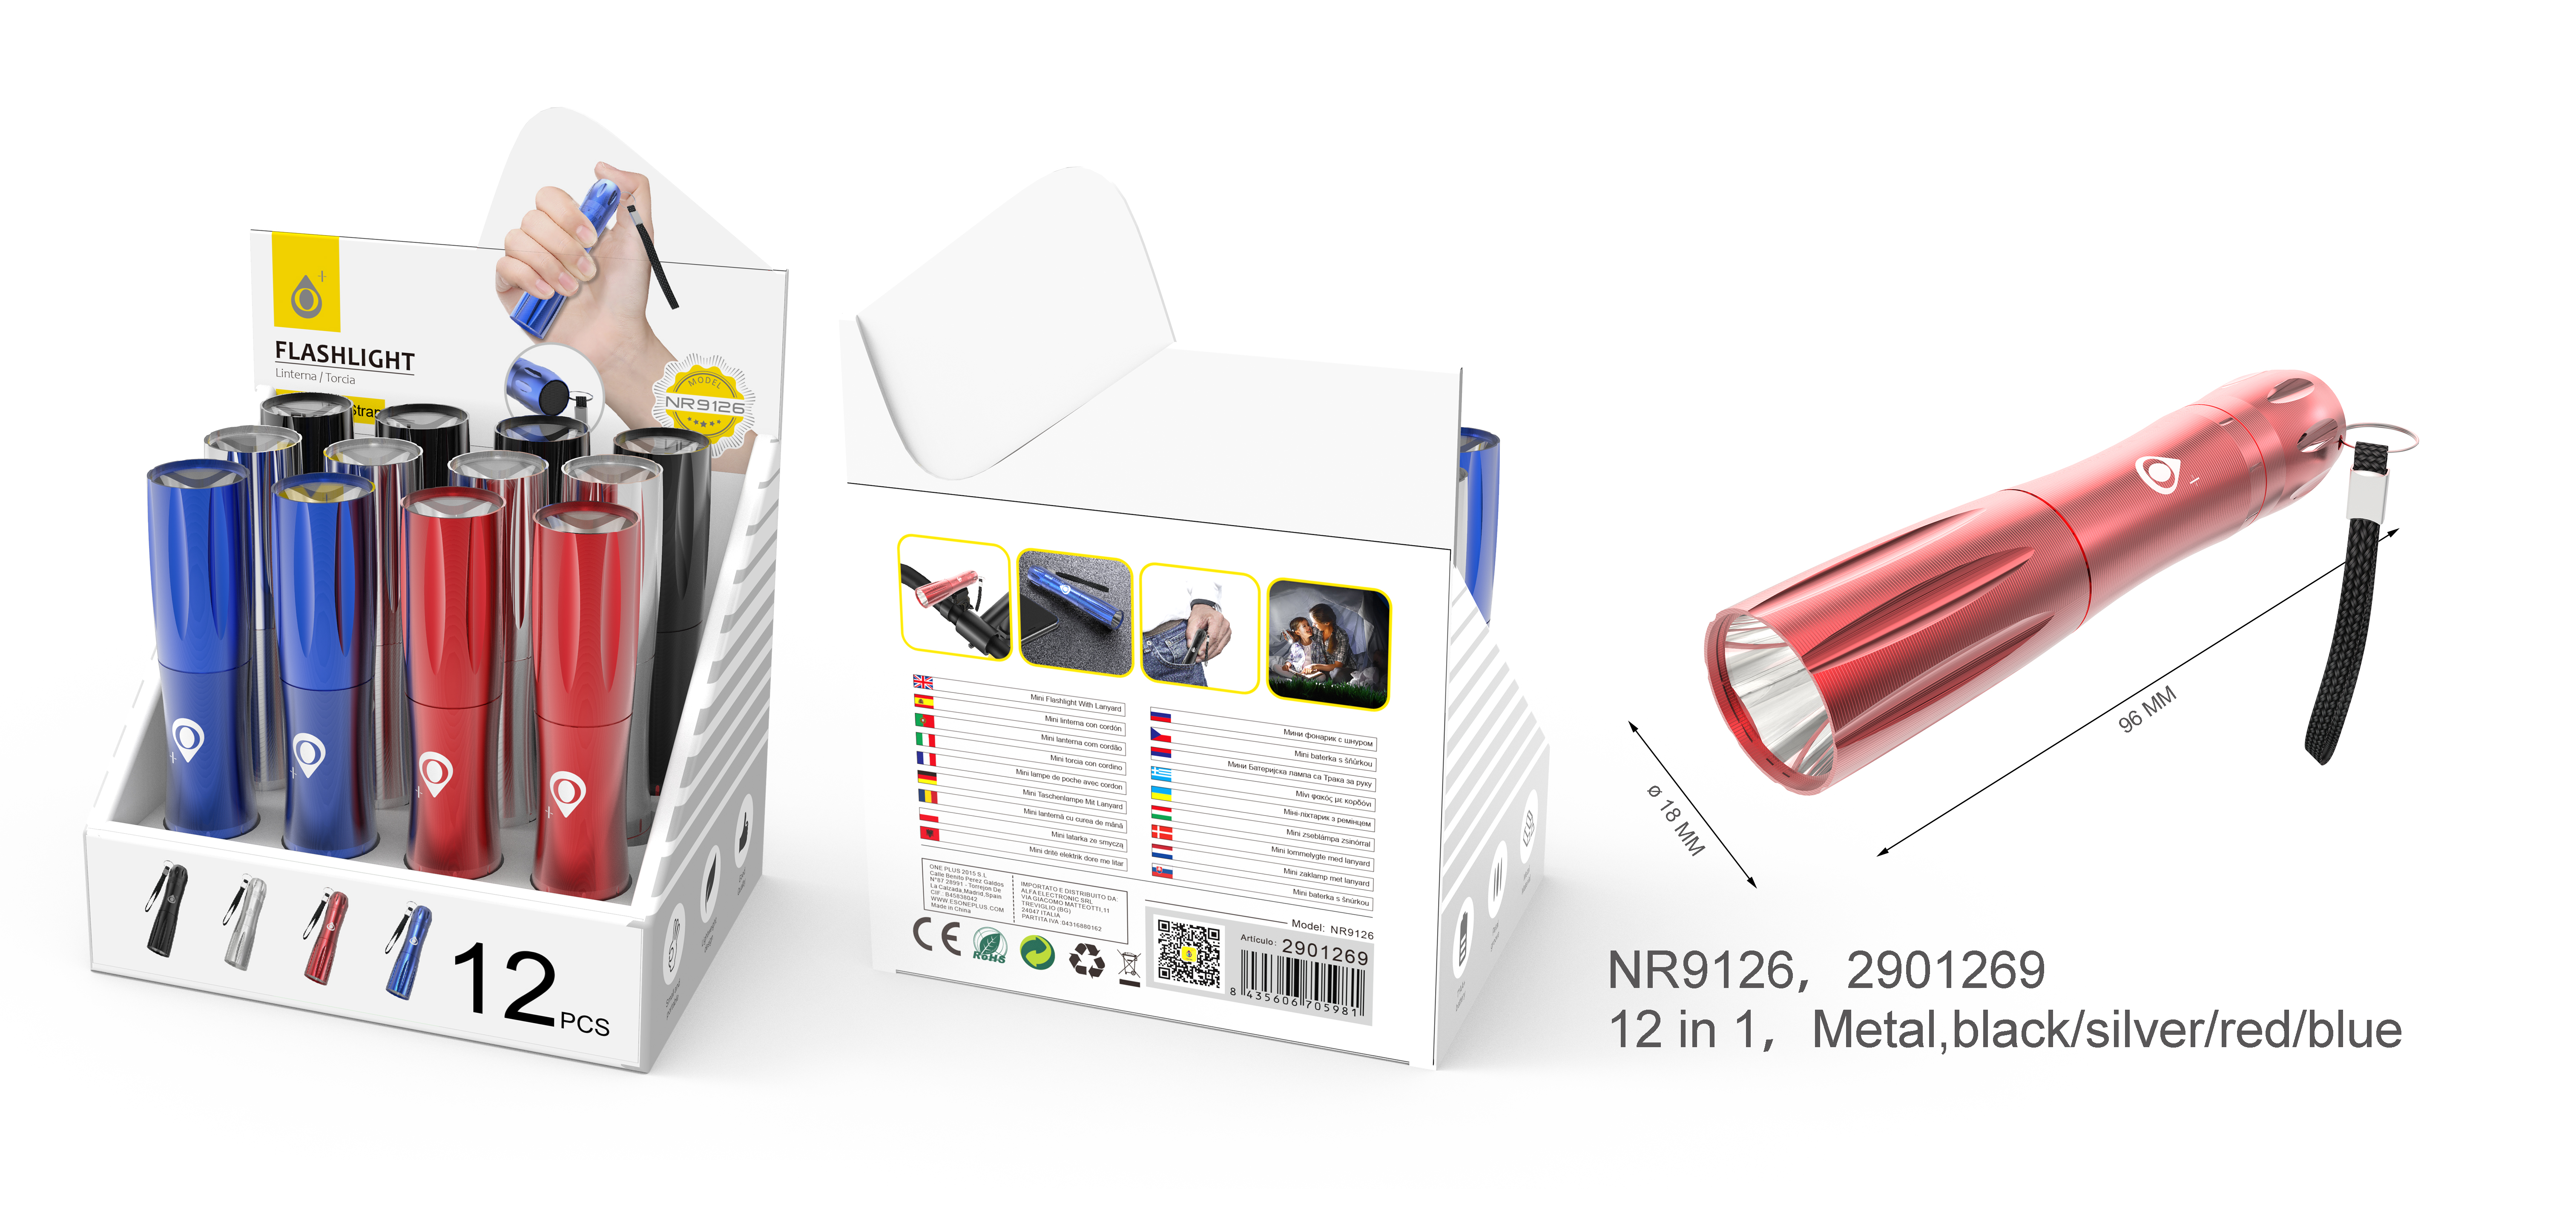 NR9126 MIDI Linterna Portatil LED Con Correa Para Muñeca,4 Colores,12 Unidades/Caja (Solo Venta por caja)